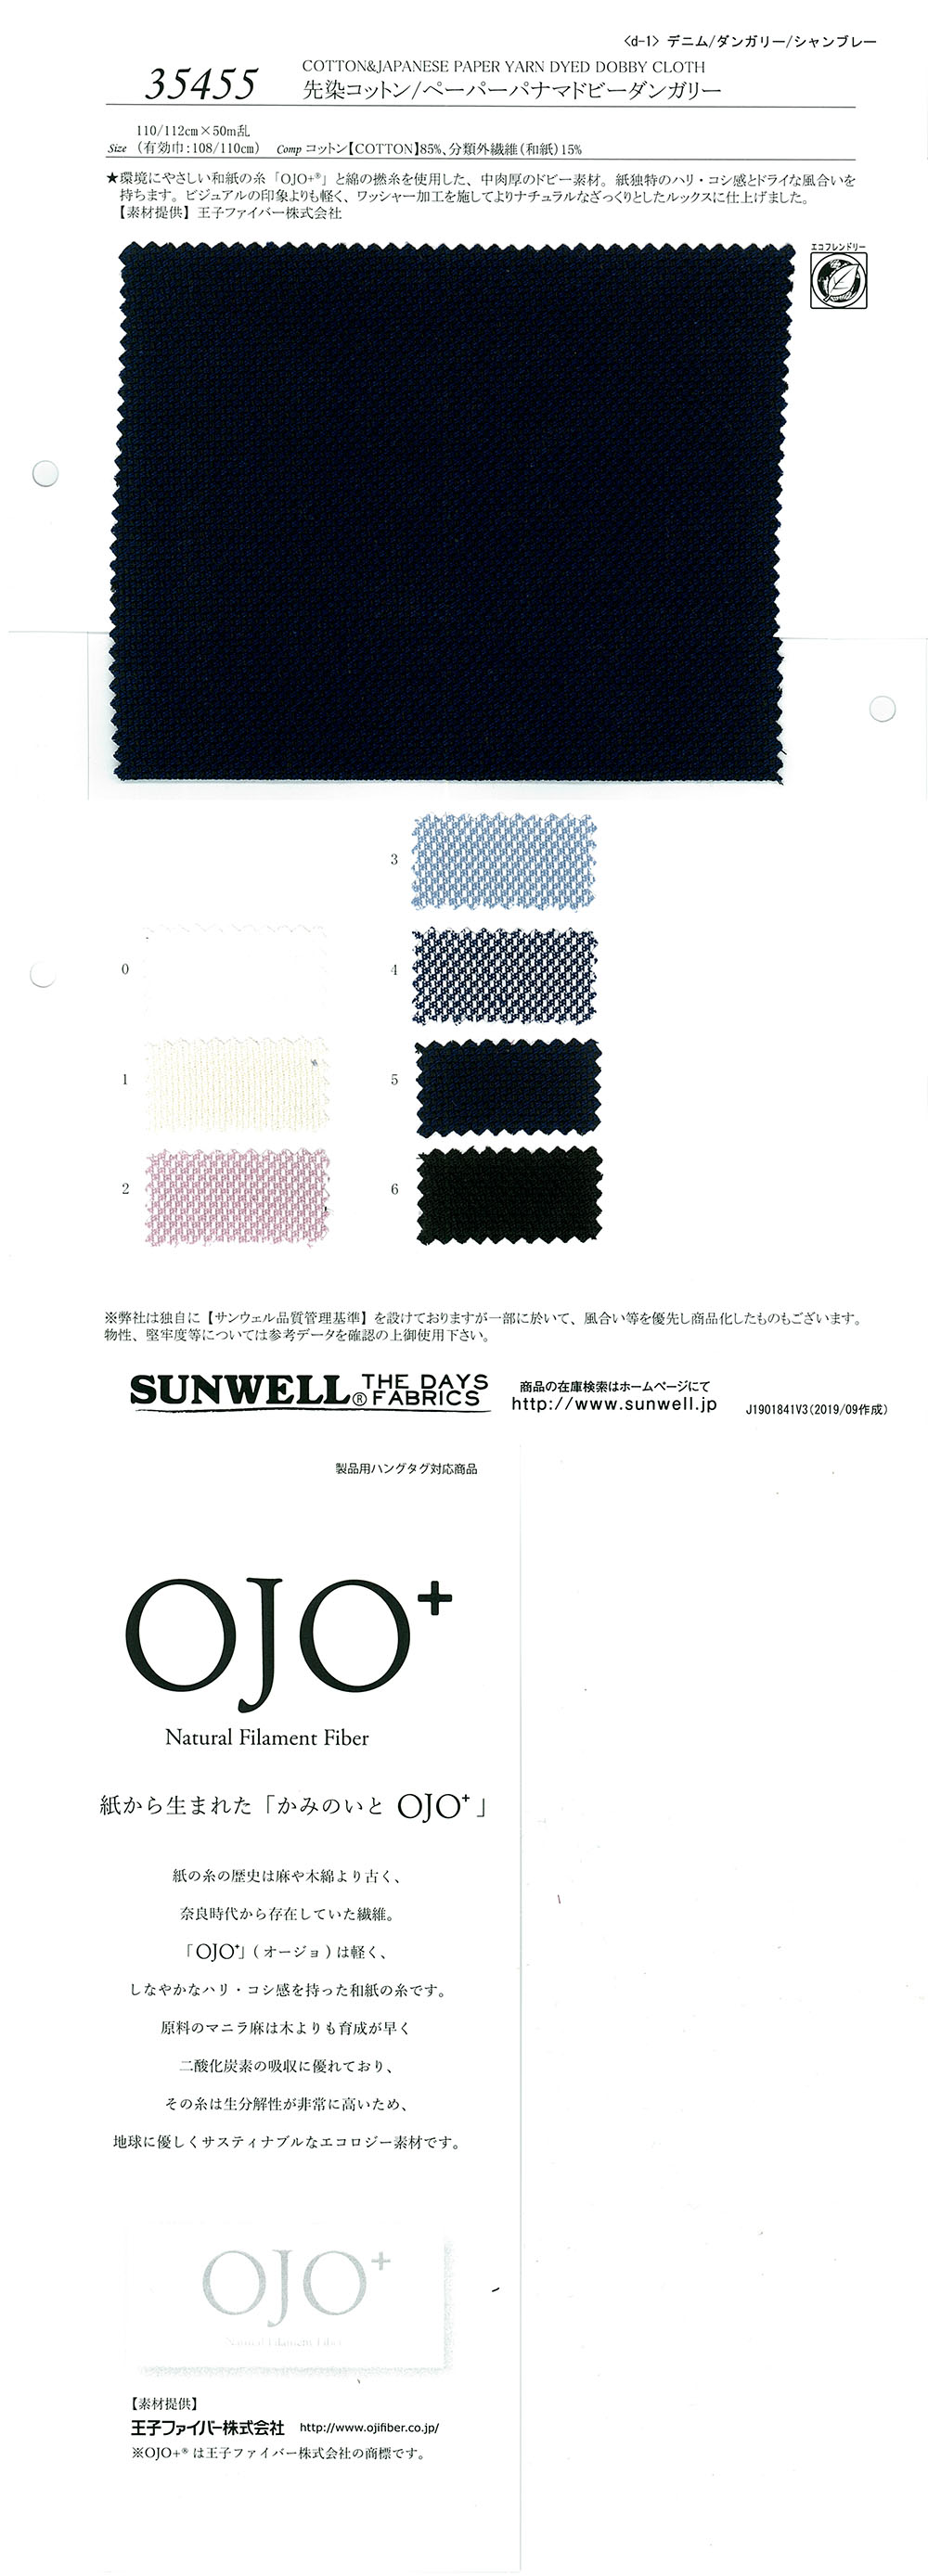 35455 Yarn-dyed Cotton/paper Panama Dobby Dungaree[Textile / Fabric] SUNWELL